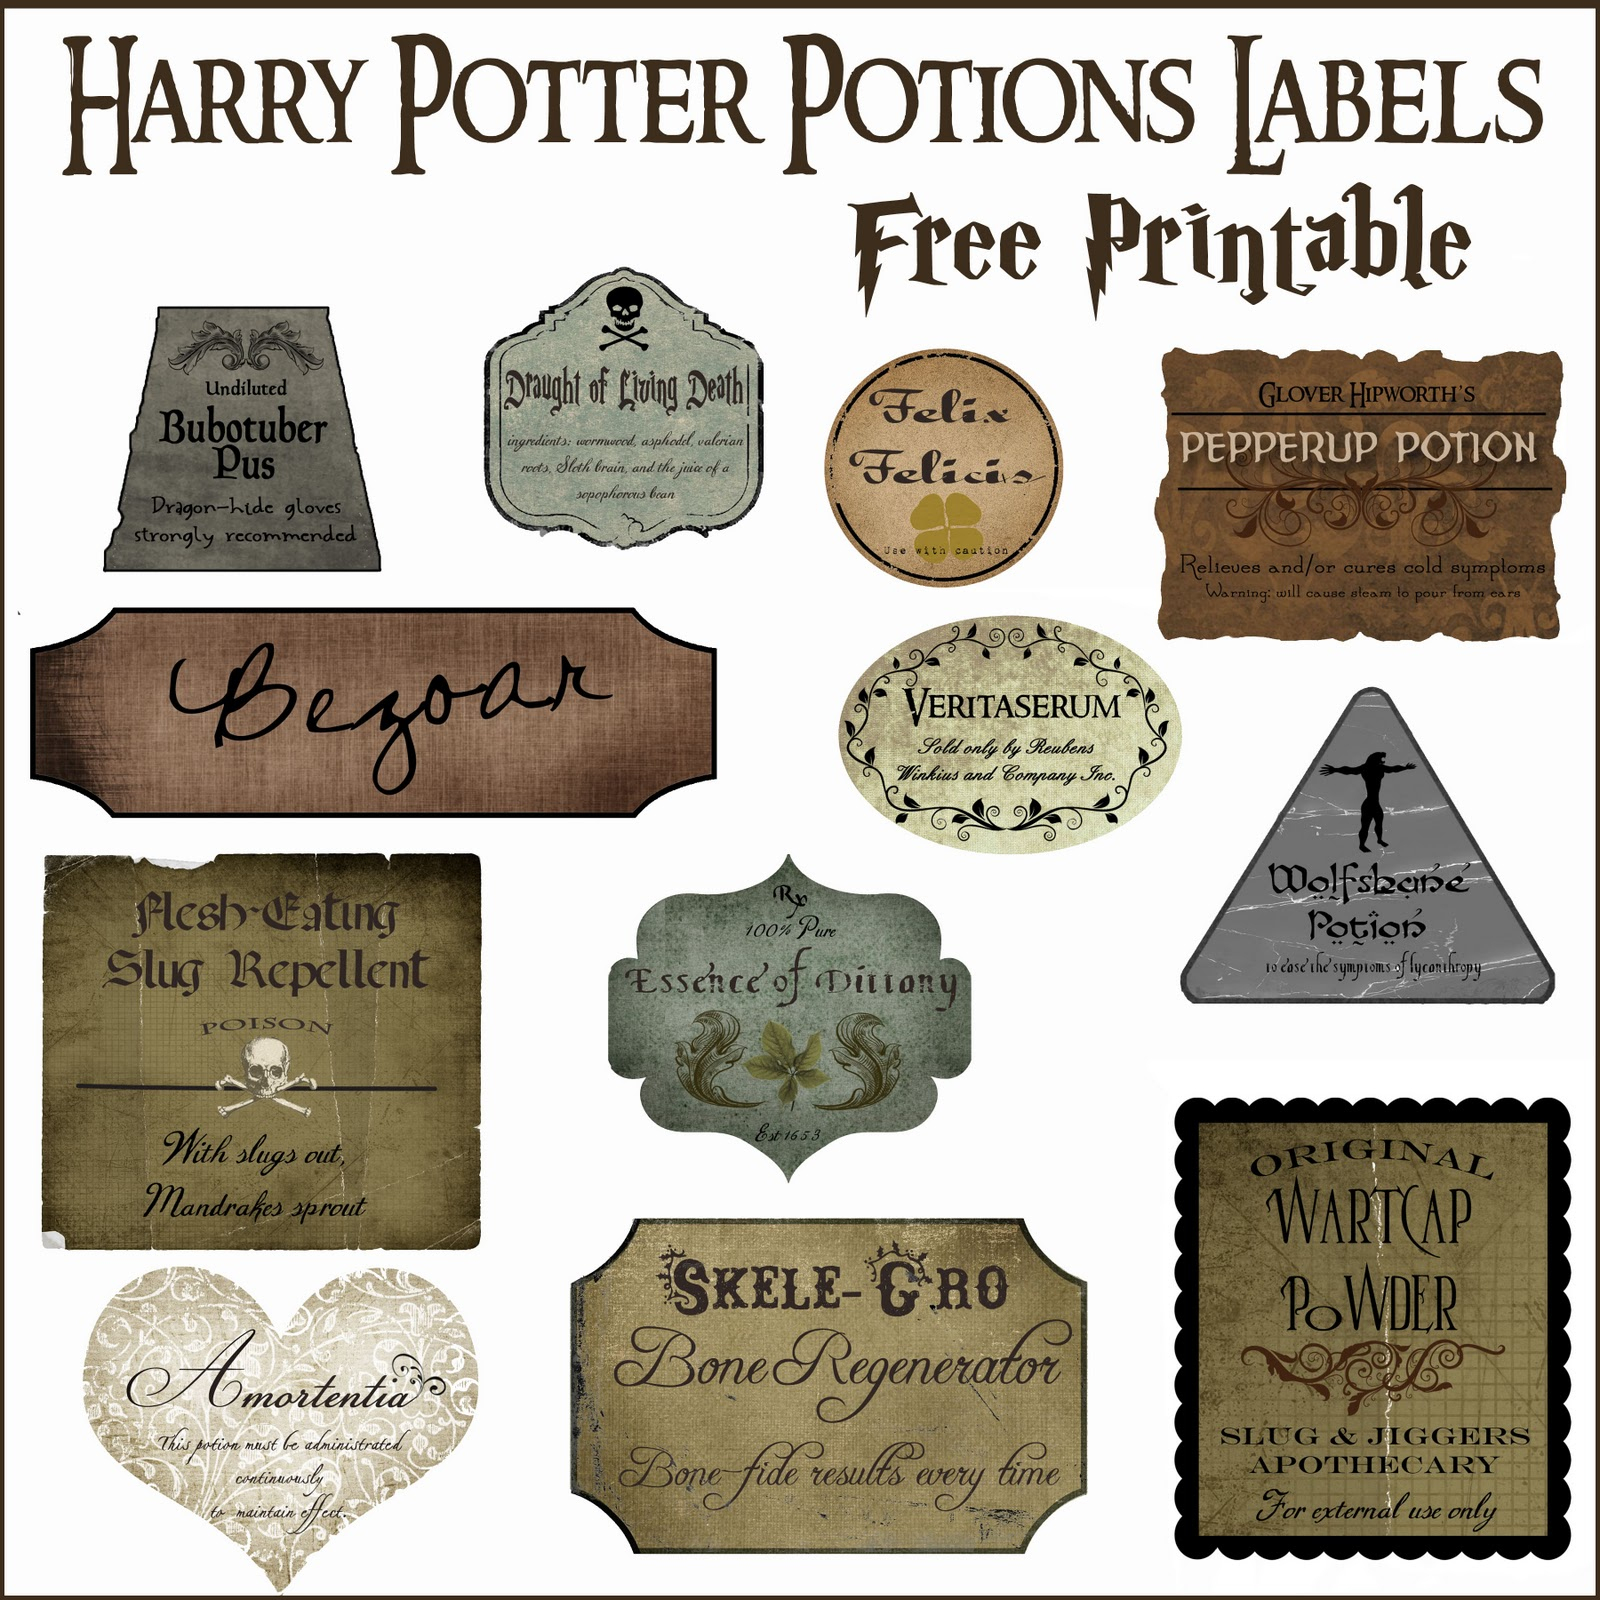 Harry Potter Potion Label Printables - Free Printable Potion Labels